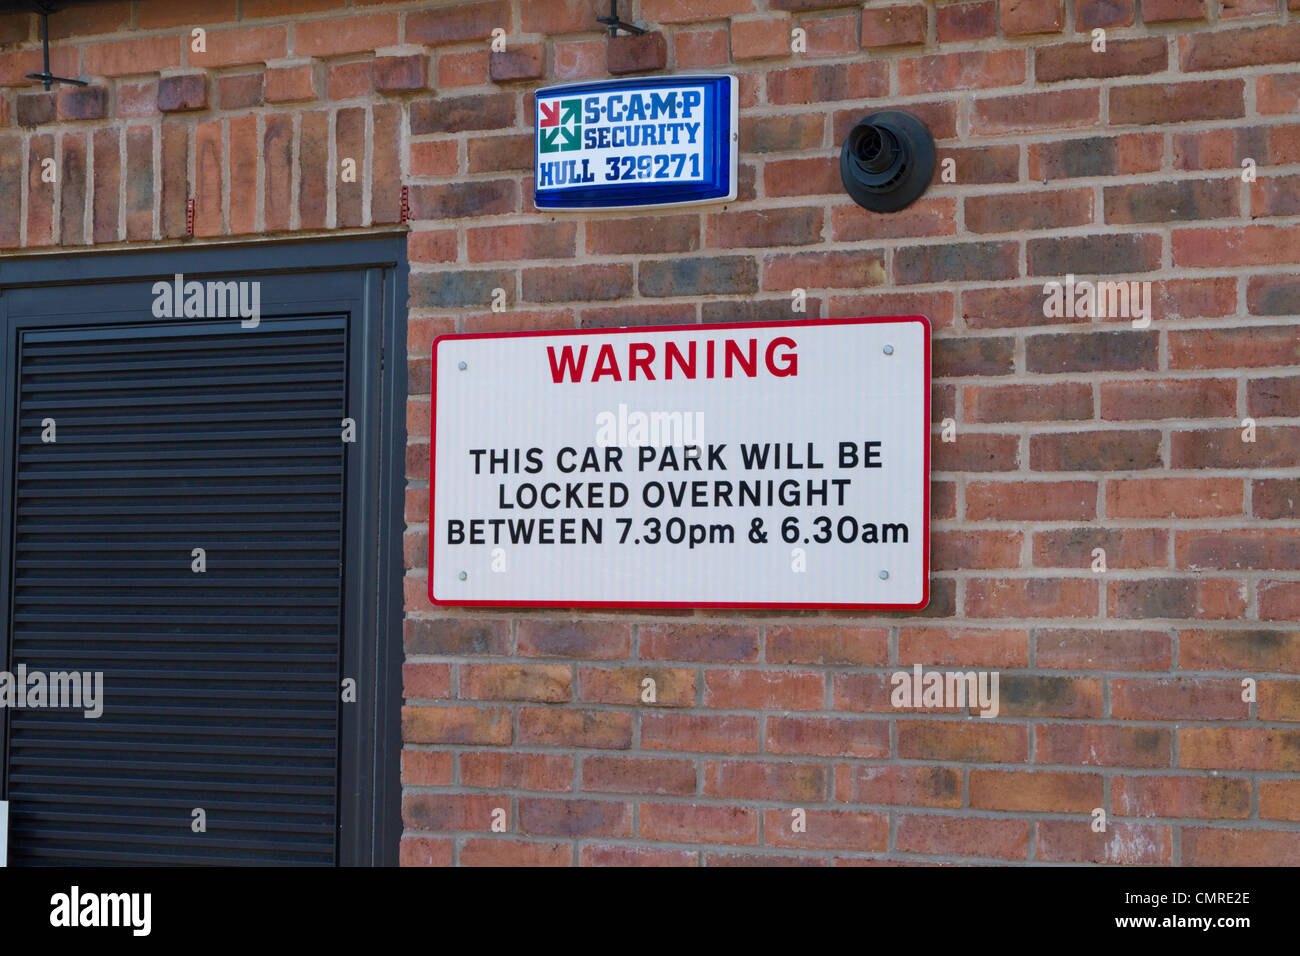 Car park warning sign Stock Photo